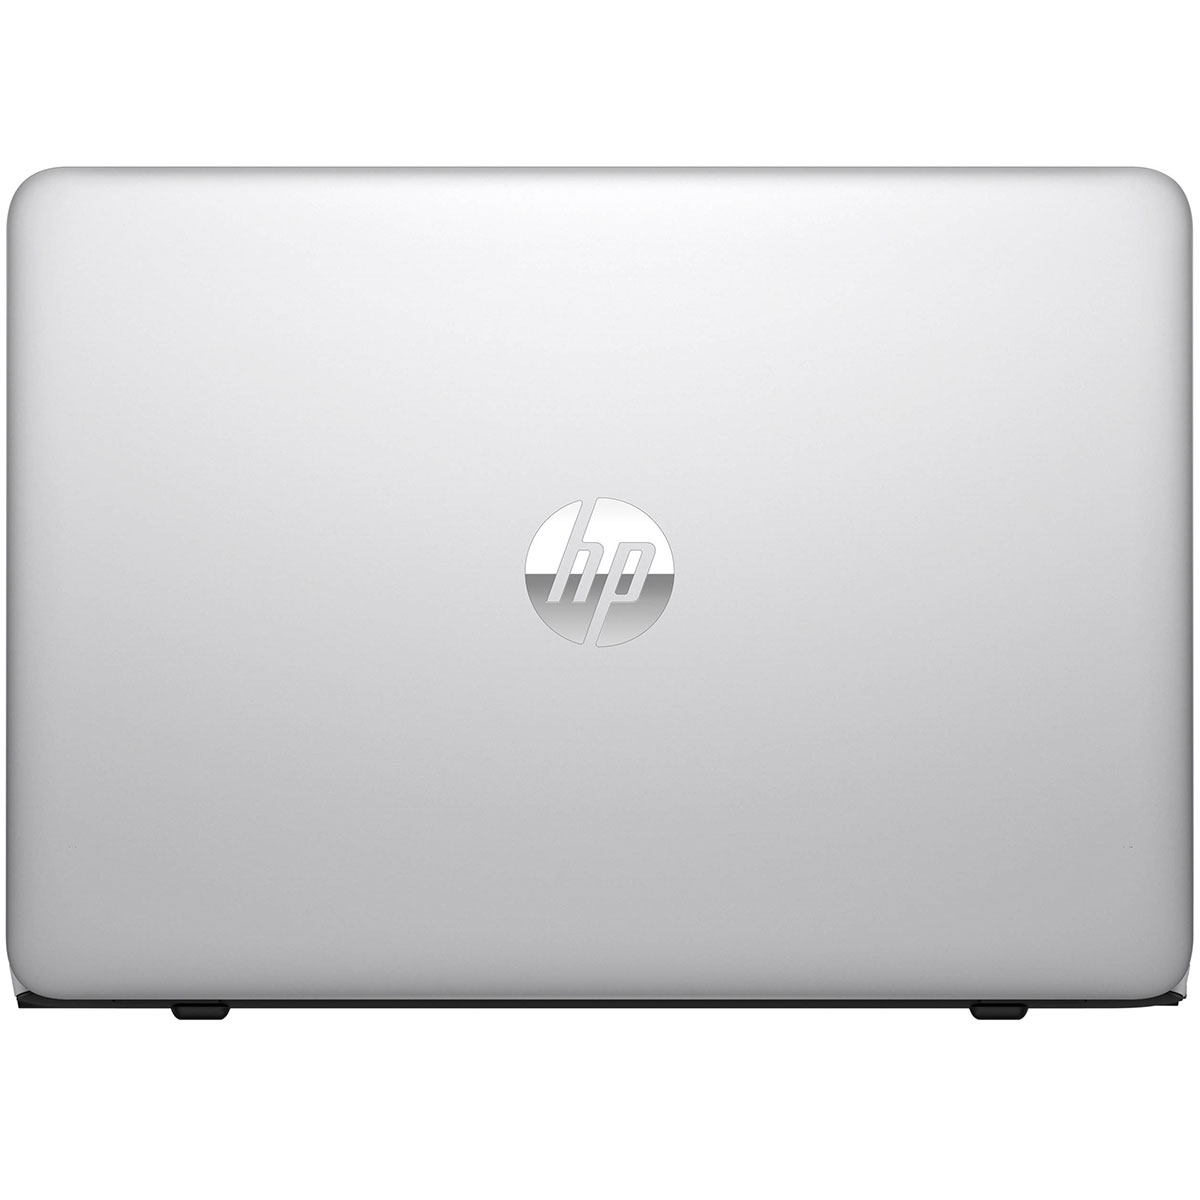 HP Elitebook 840 G3 Laptop – Intel Core i7 - 500GB - 8GB Ram